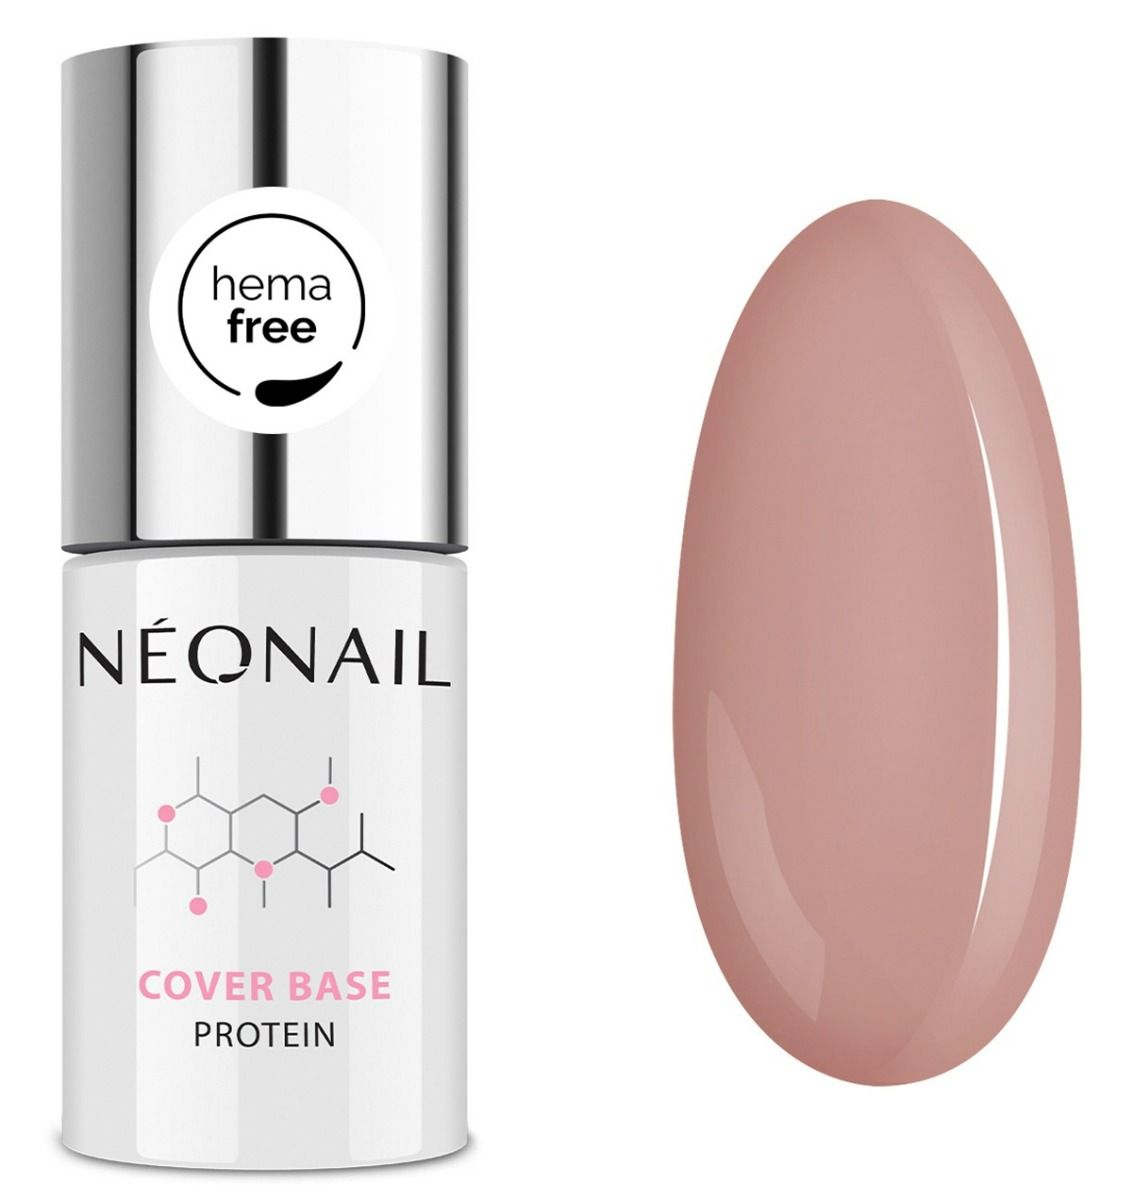 Neonail Cover Base Protein база для гибридного лака, Cream Beige